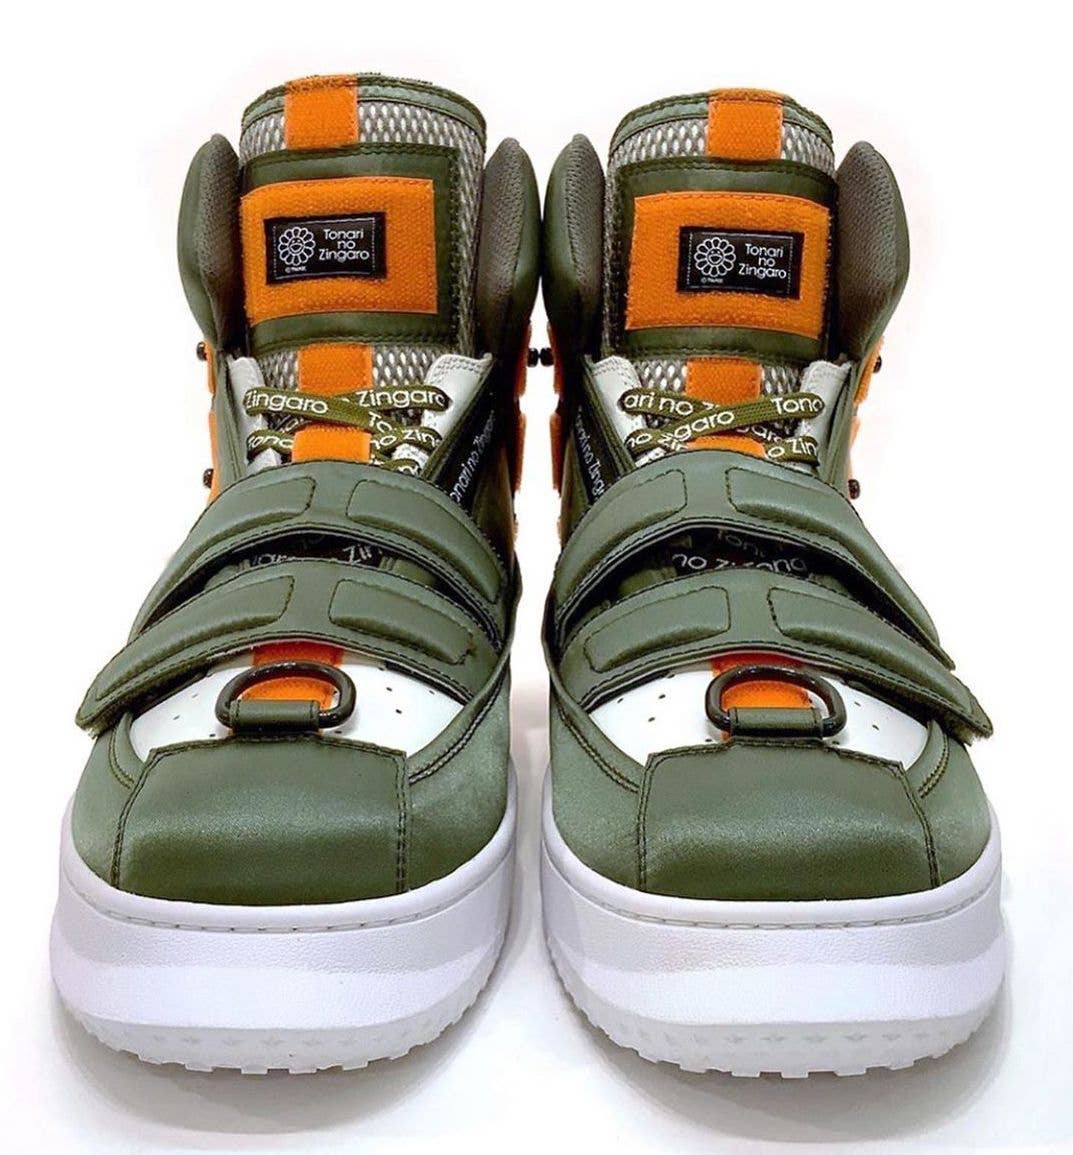 High-detail nike sneakers designed by takashi murakami